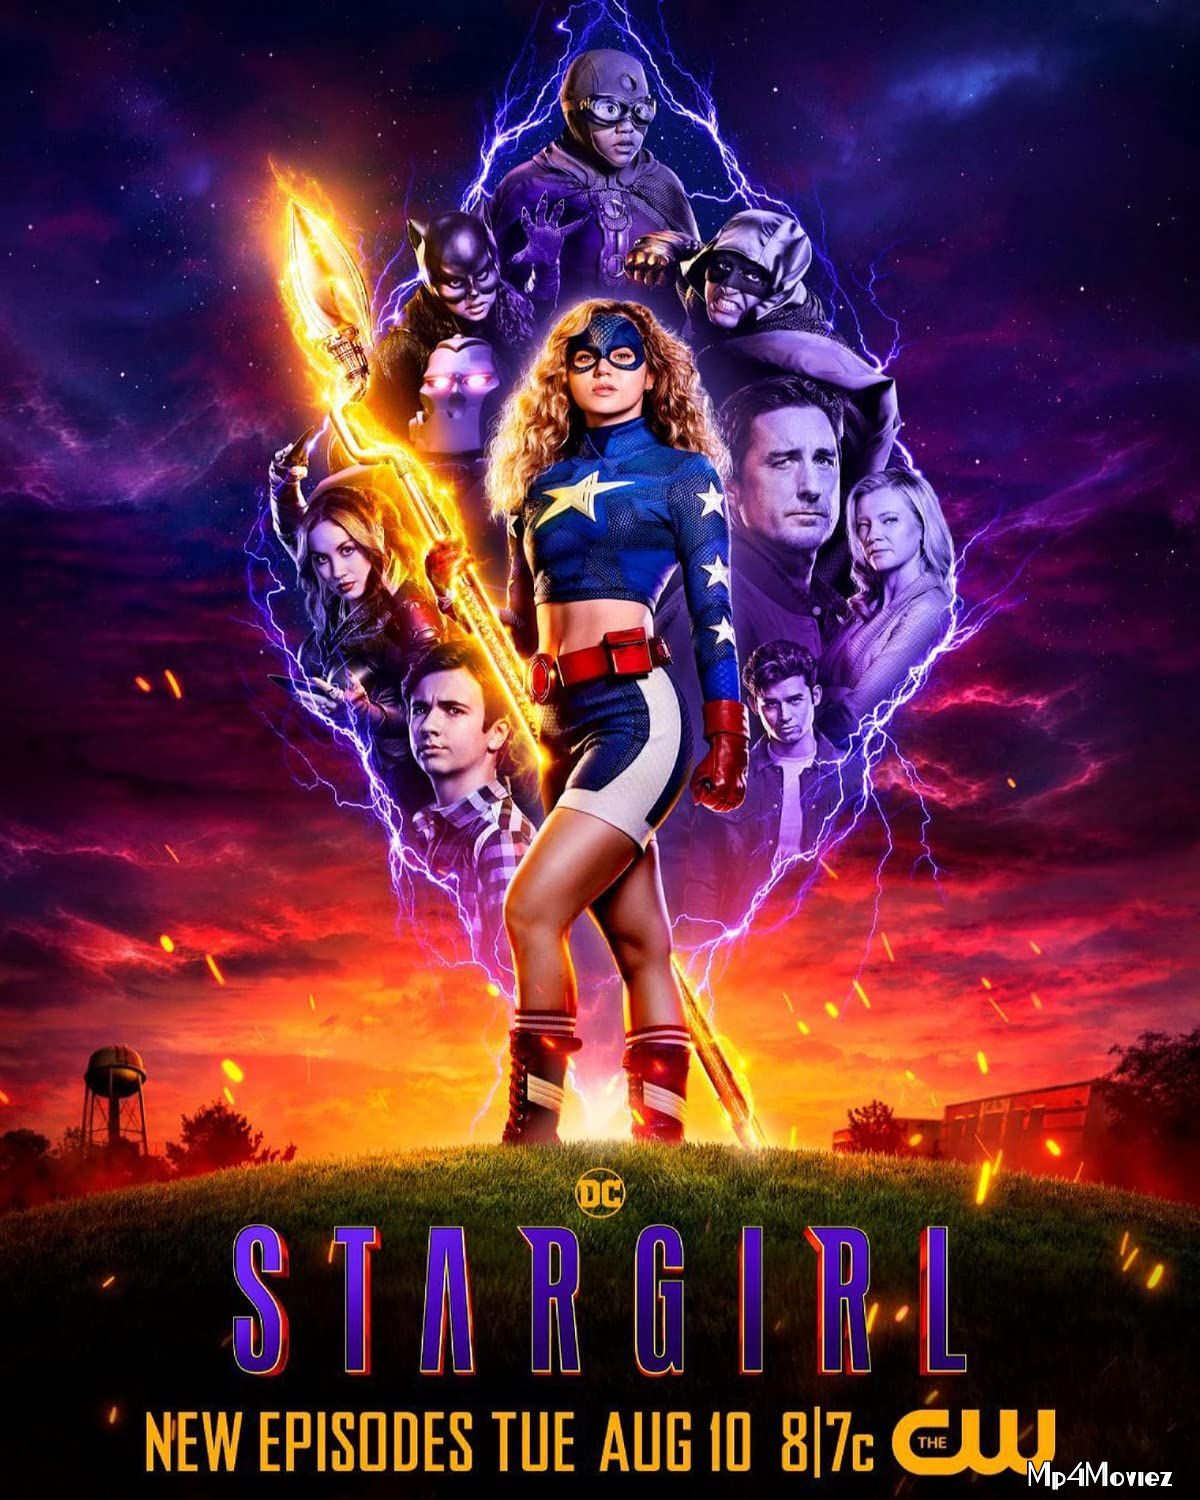 Stargirl Season 2 (2021) English Complete TV Series download full movie